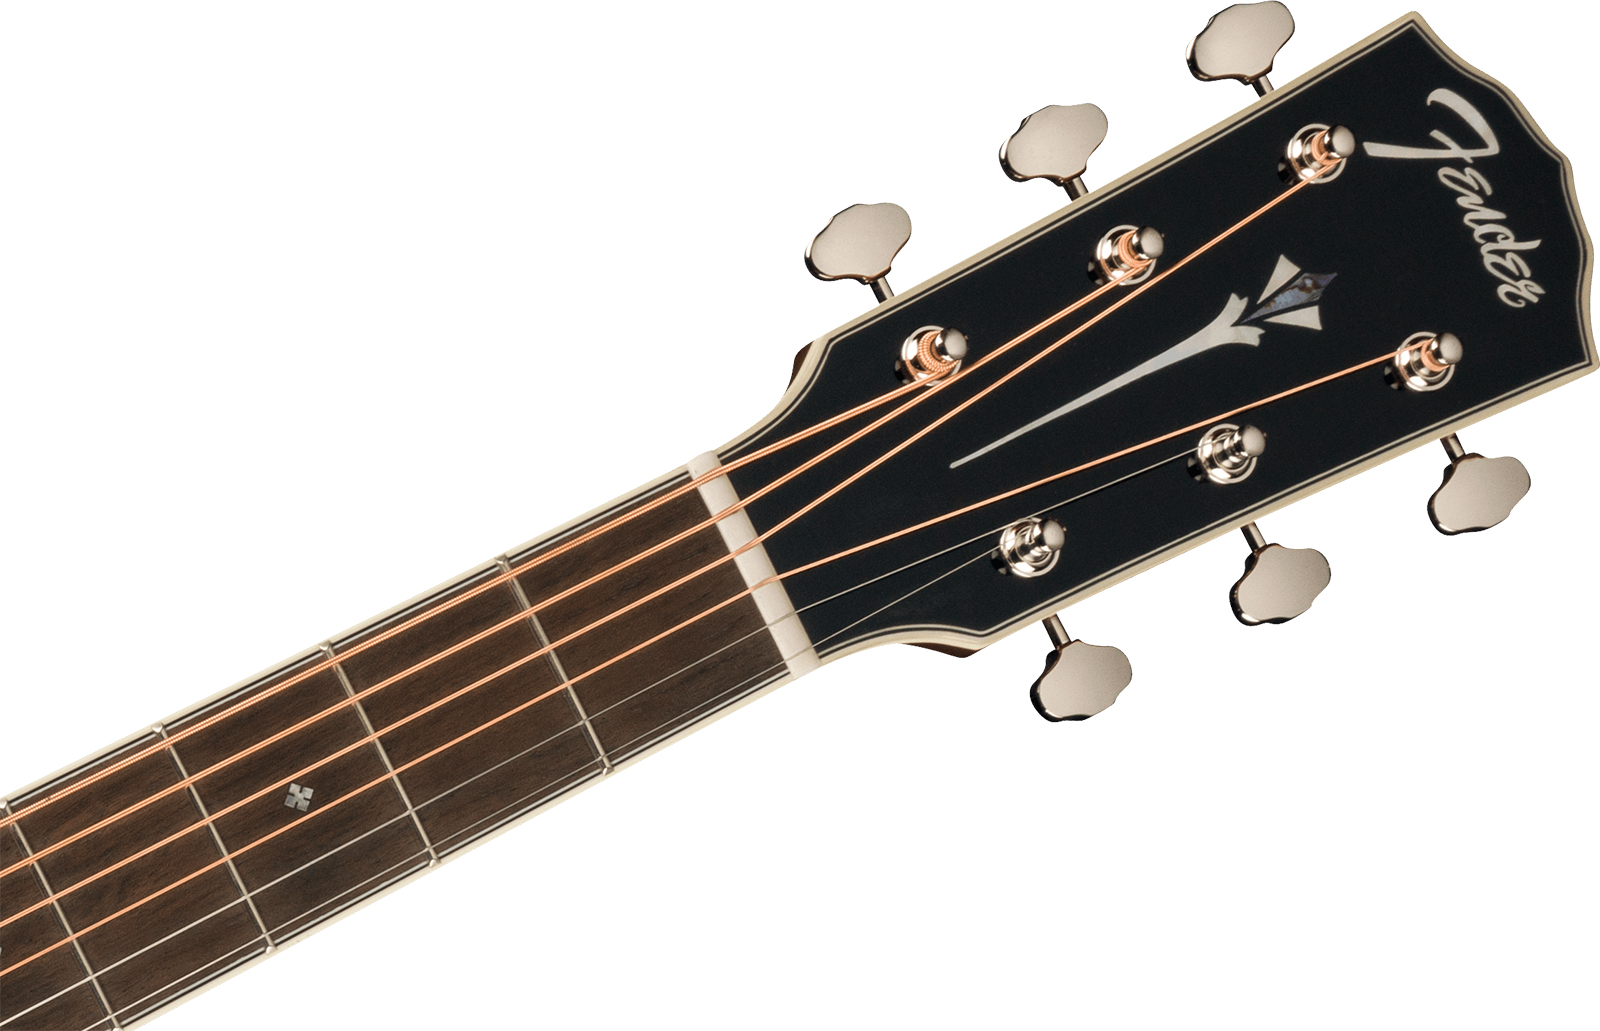 Fender Po-220e Paramount Fsr Ltd Orchestra Model Om Epicea Ovangkol Ova - Aged Natural - Elektroakustische Gitarre - Variation 3